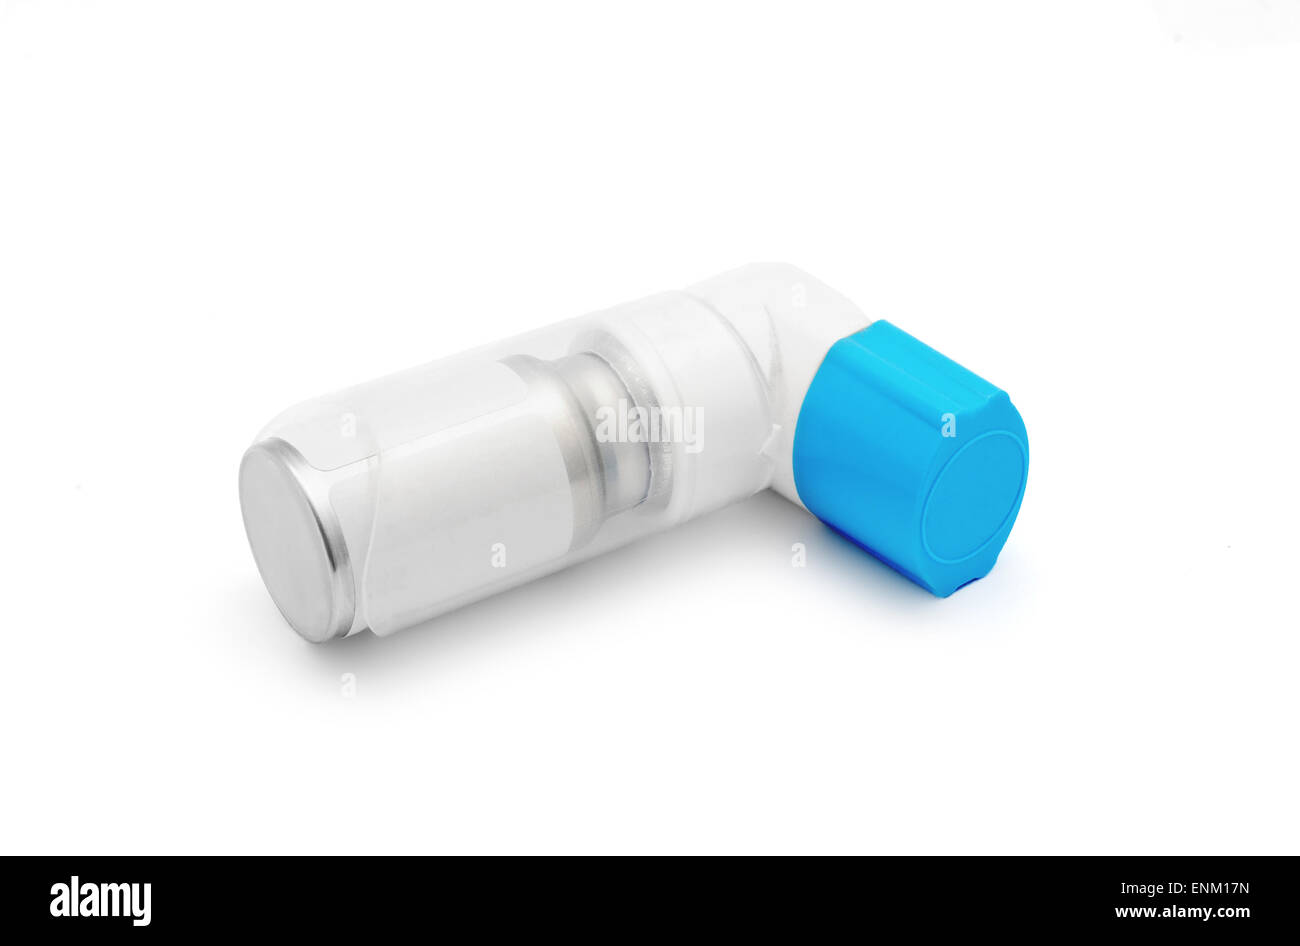 asthma inhaler on white background Stock Photo